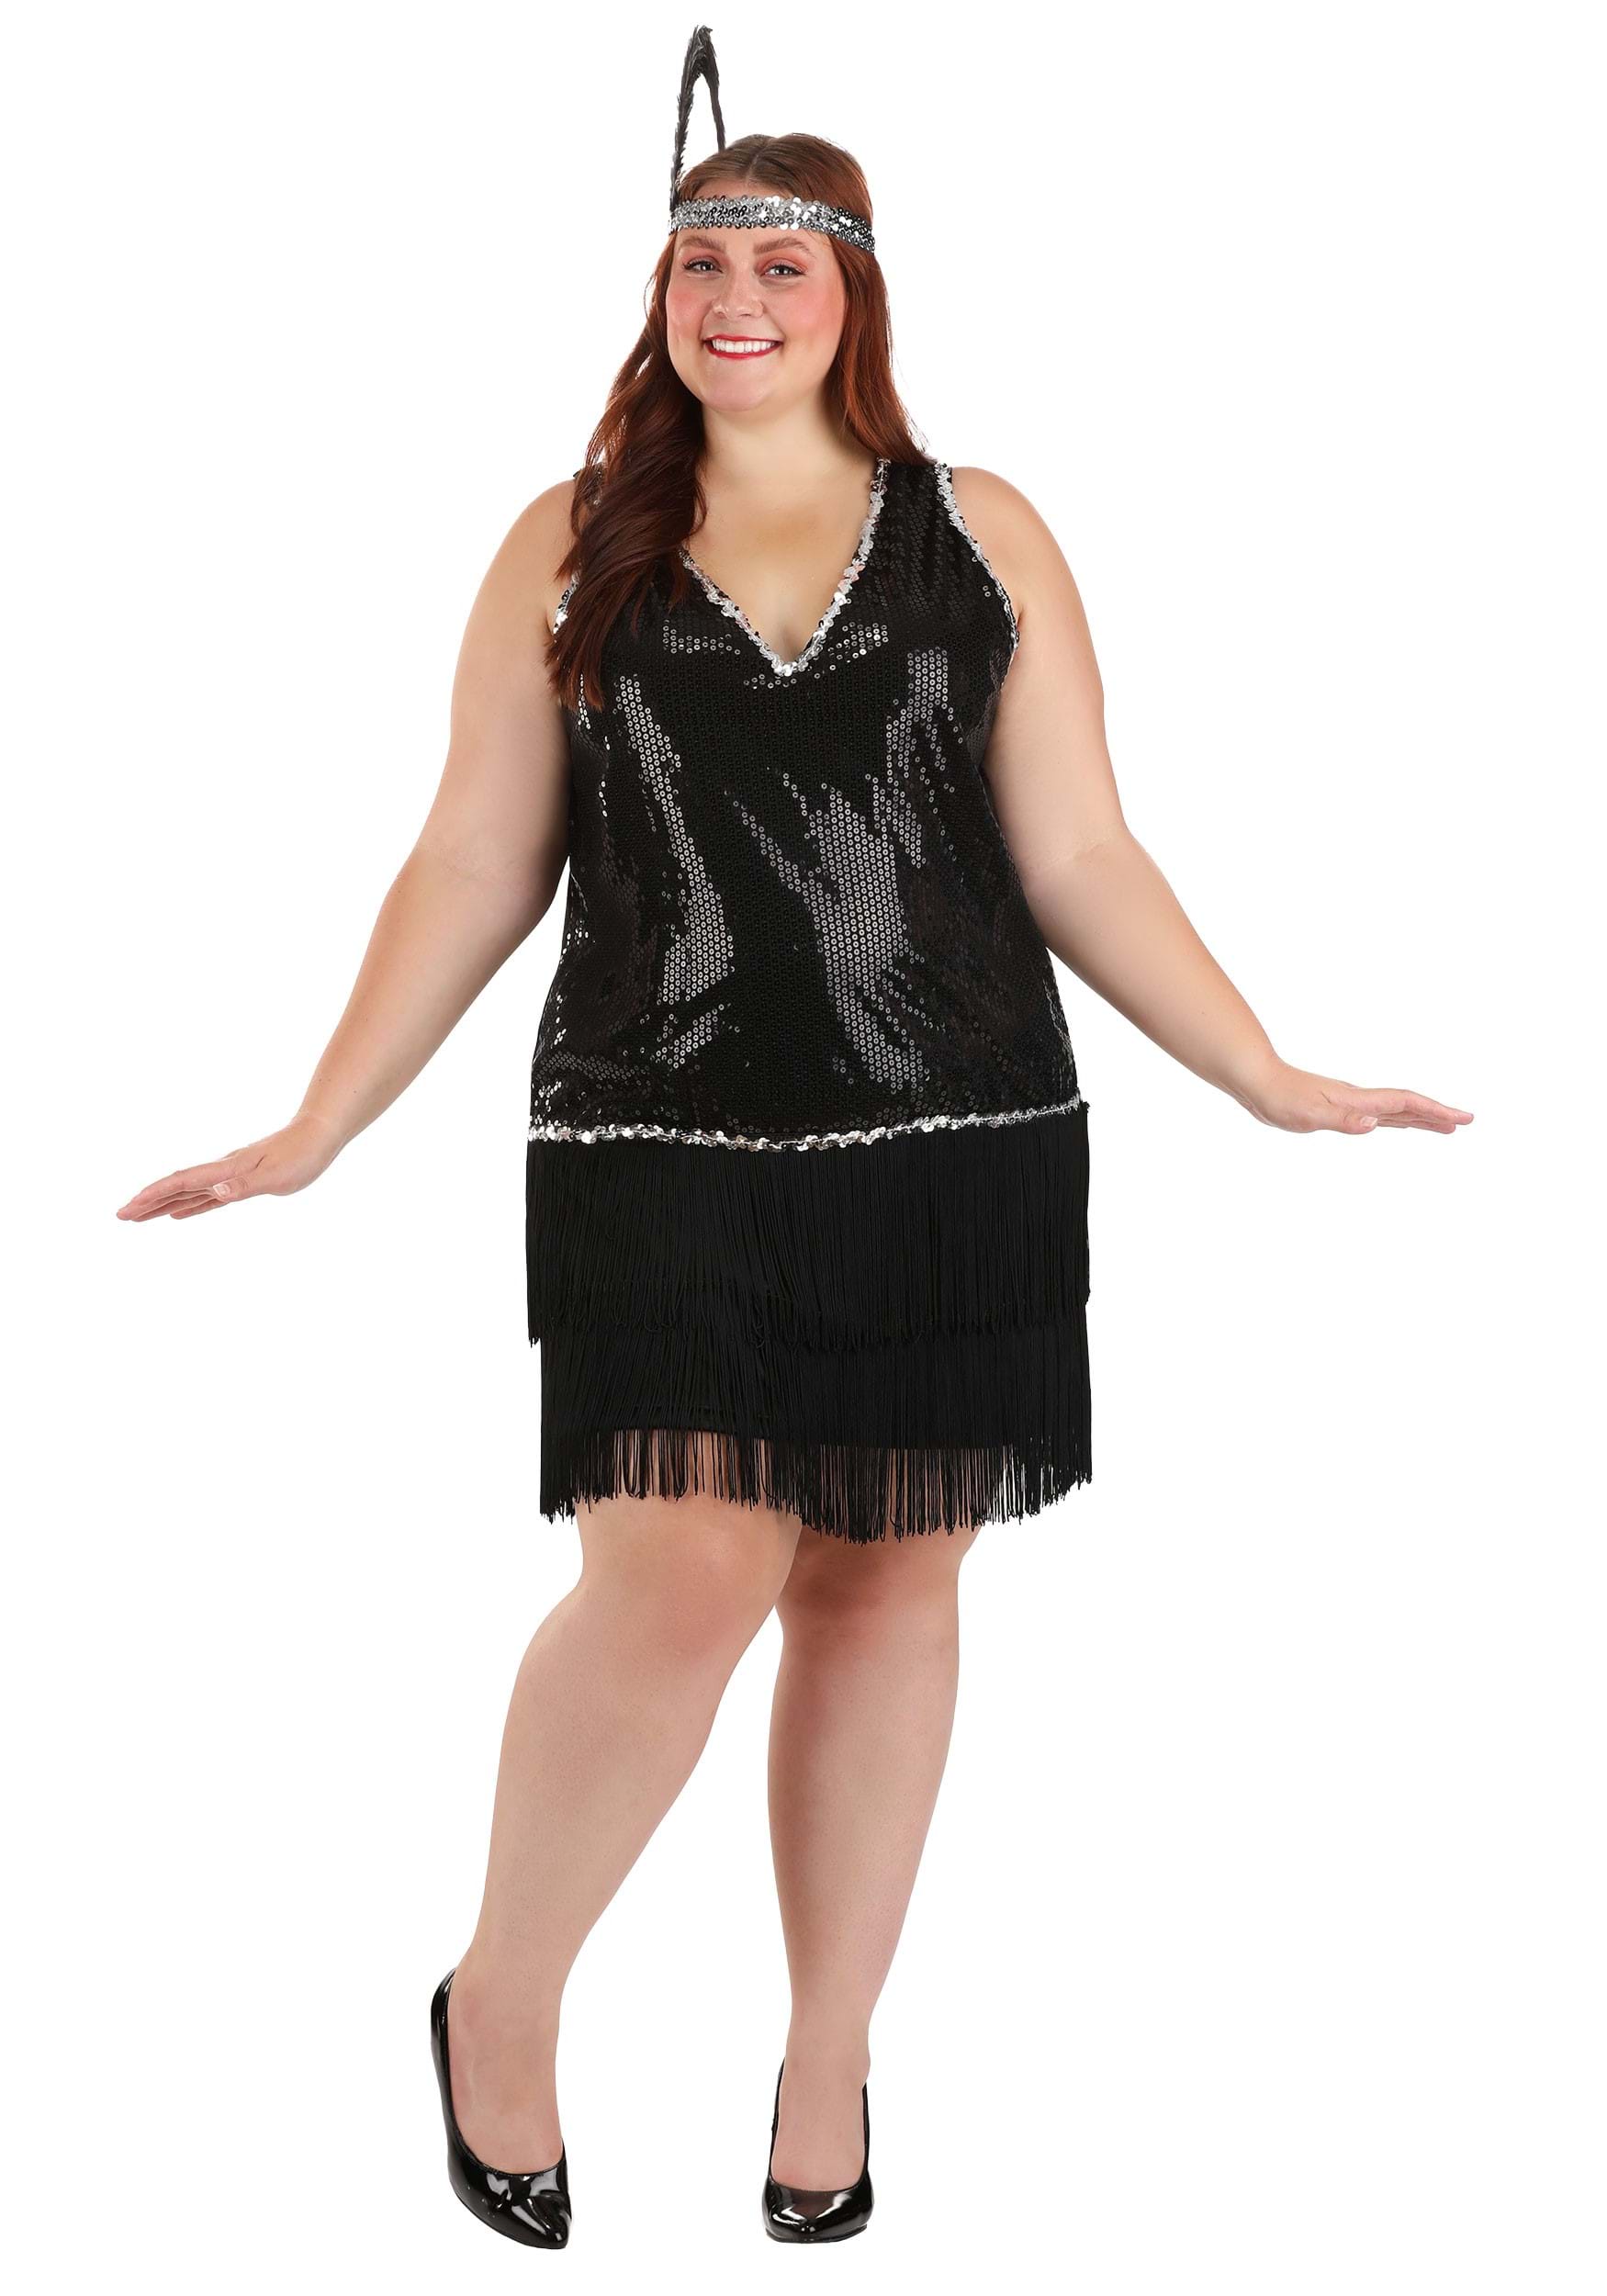 Photos - Fancy Dress ONYX FUN Costumes Plus Size Women's Flapper Costume Black/Gray FUN0928PL 